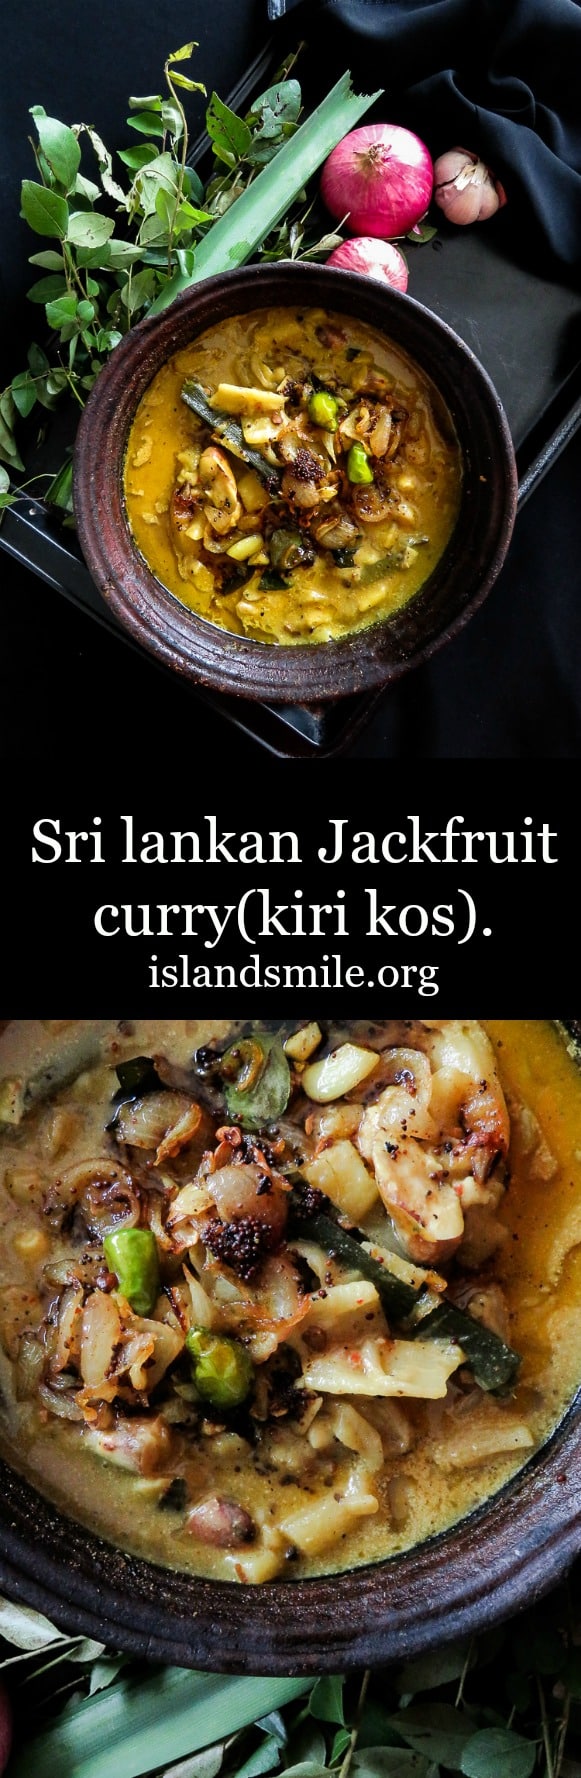 Sri Lankan jackfruit curry, ,made with creamy coconut milk,